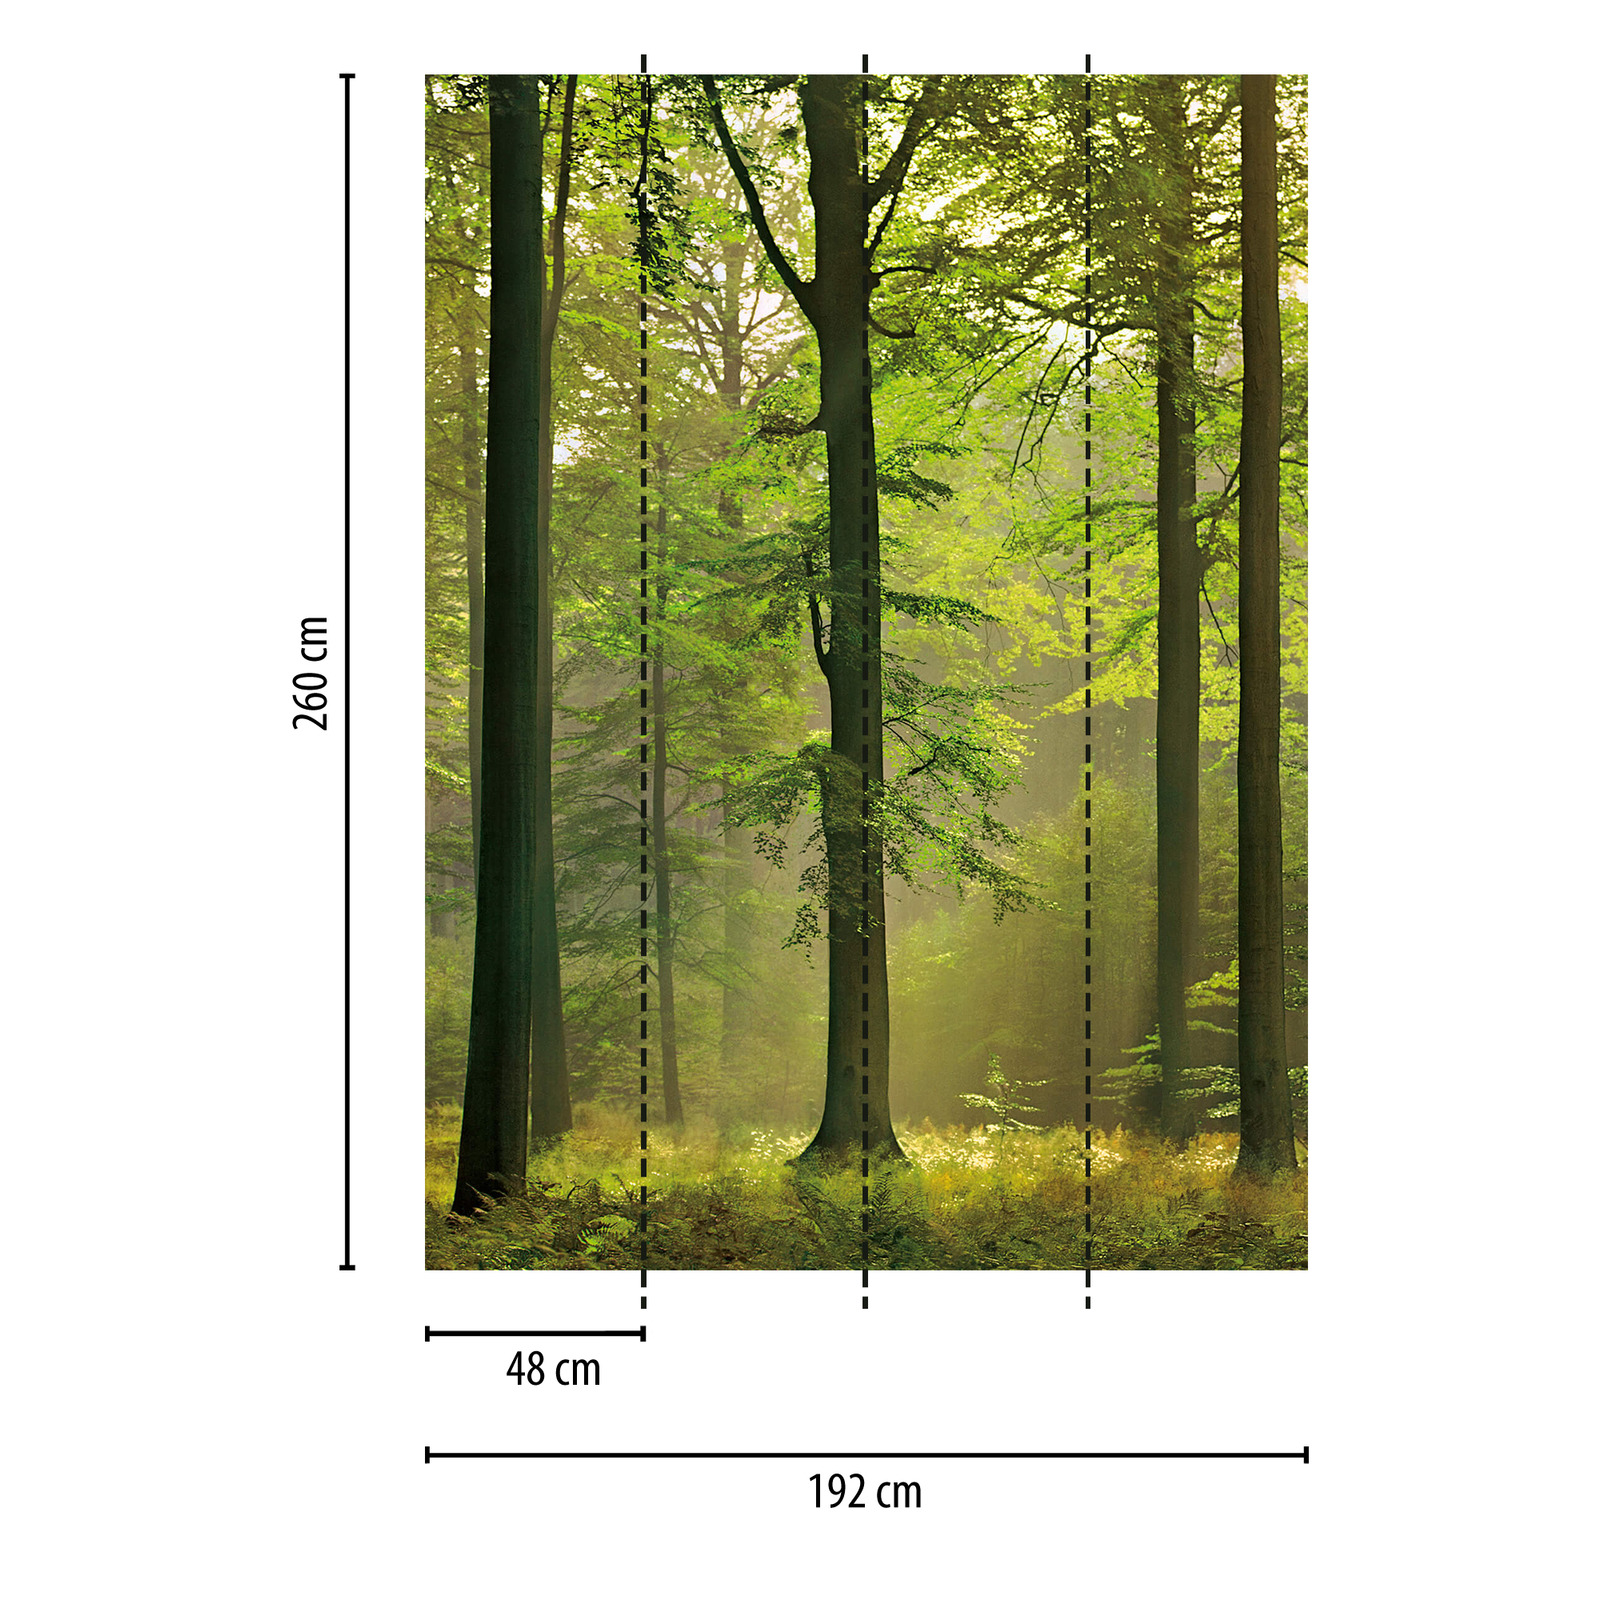             Fototapete grünes Wald-Motiv im Hochformat
        